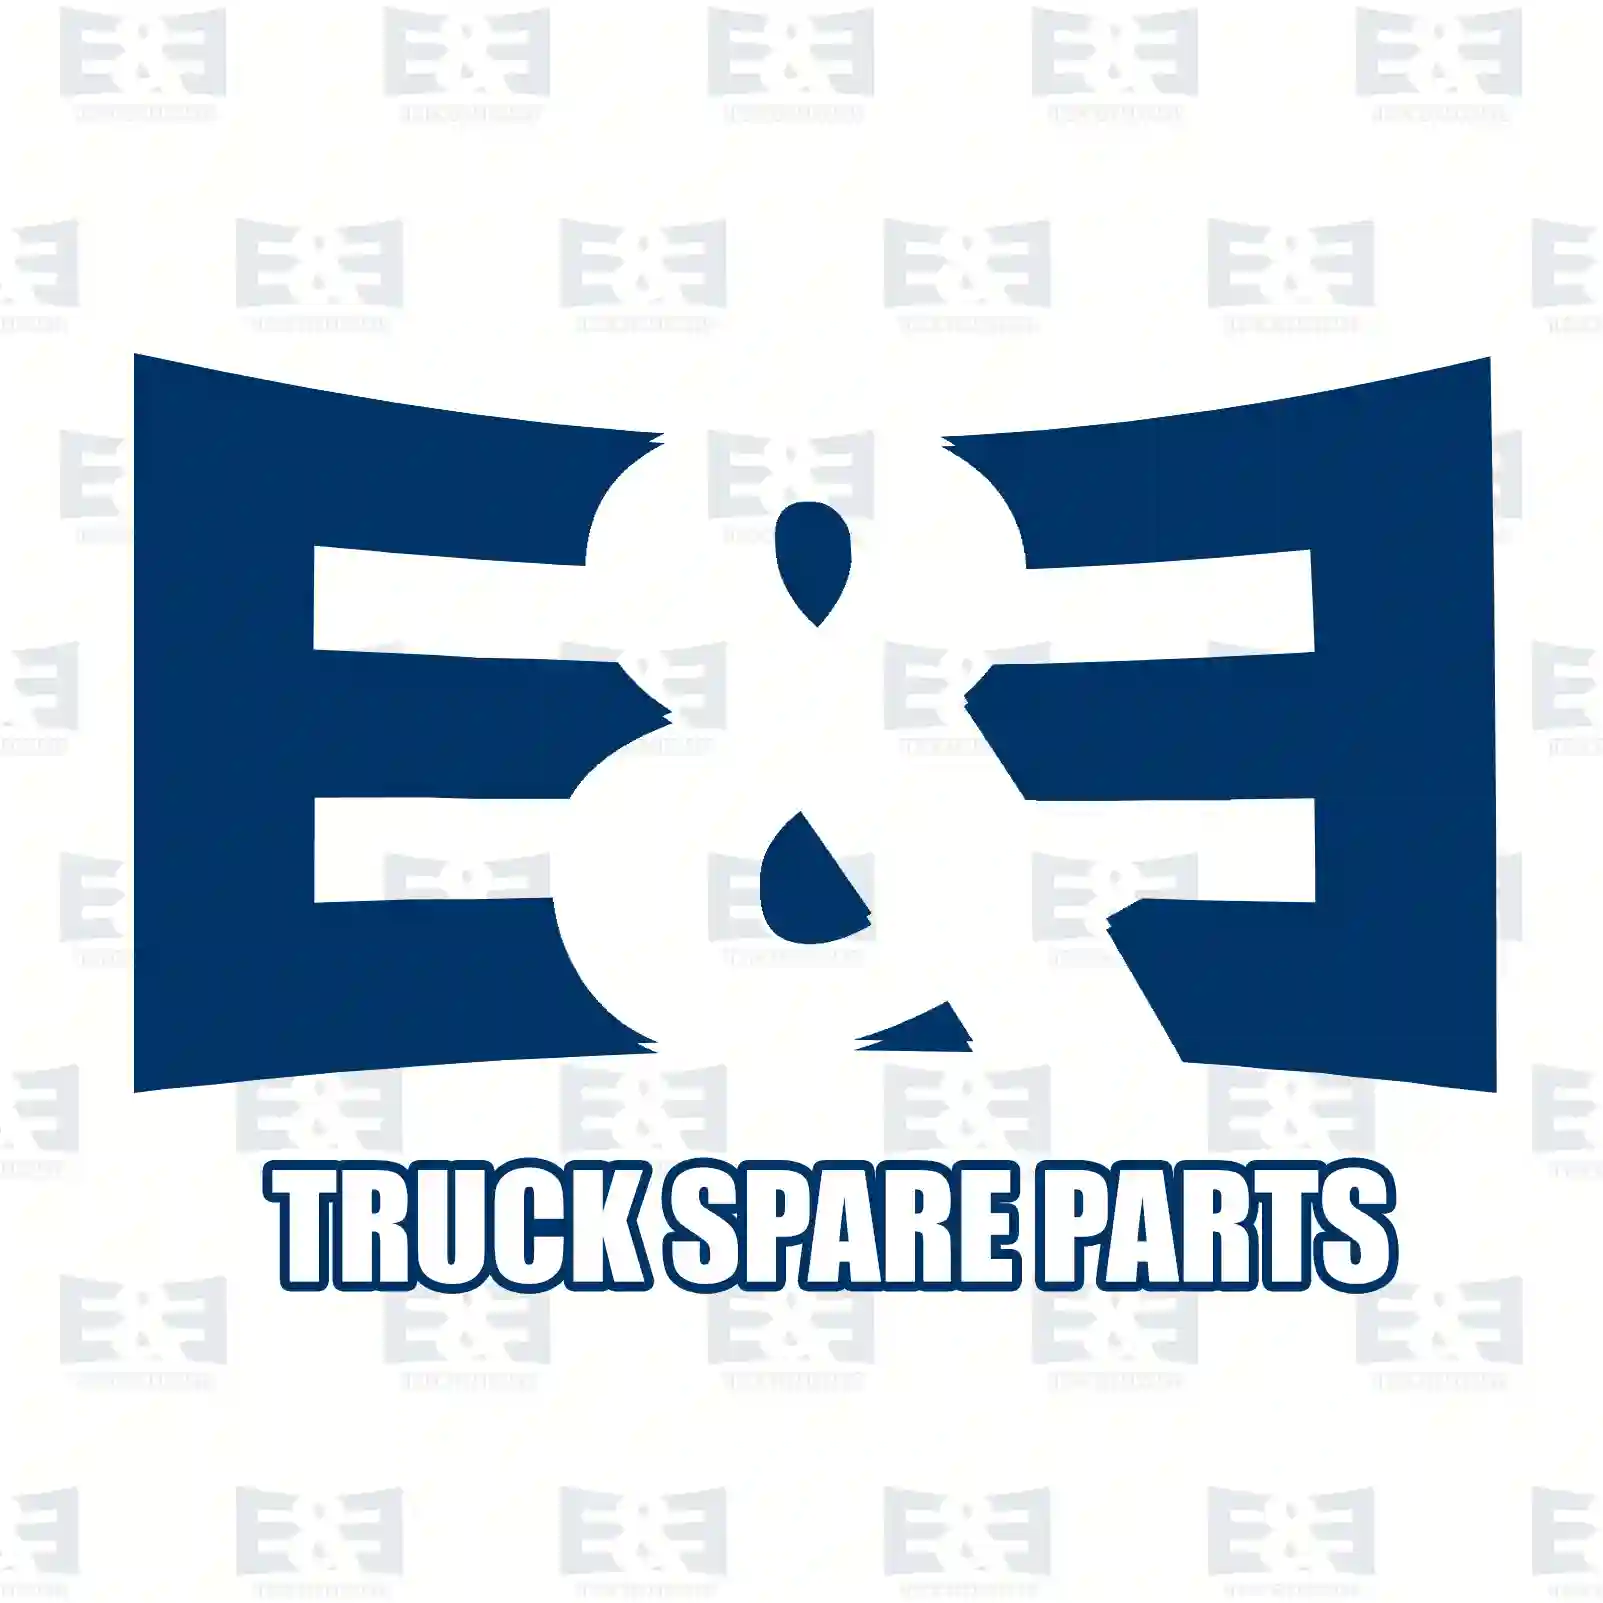  Release lever || E&E Truck Spare Parts | Truck Spare Parts, Auotomotive Spare Parts